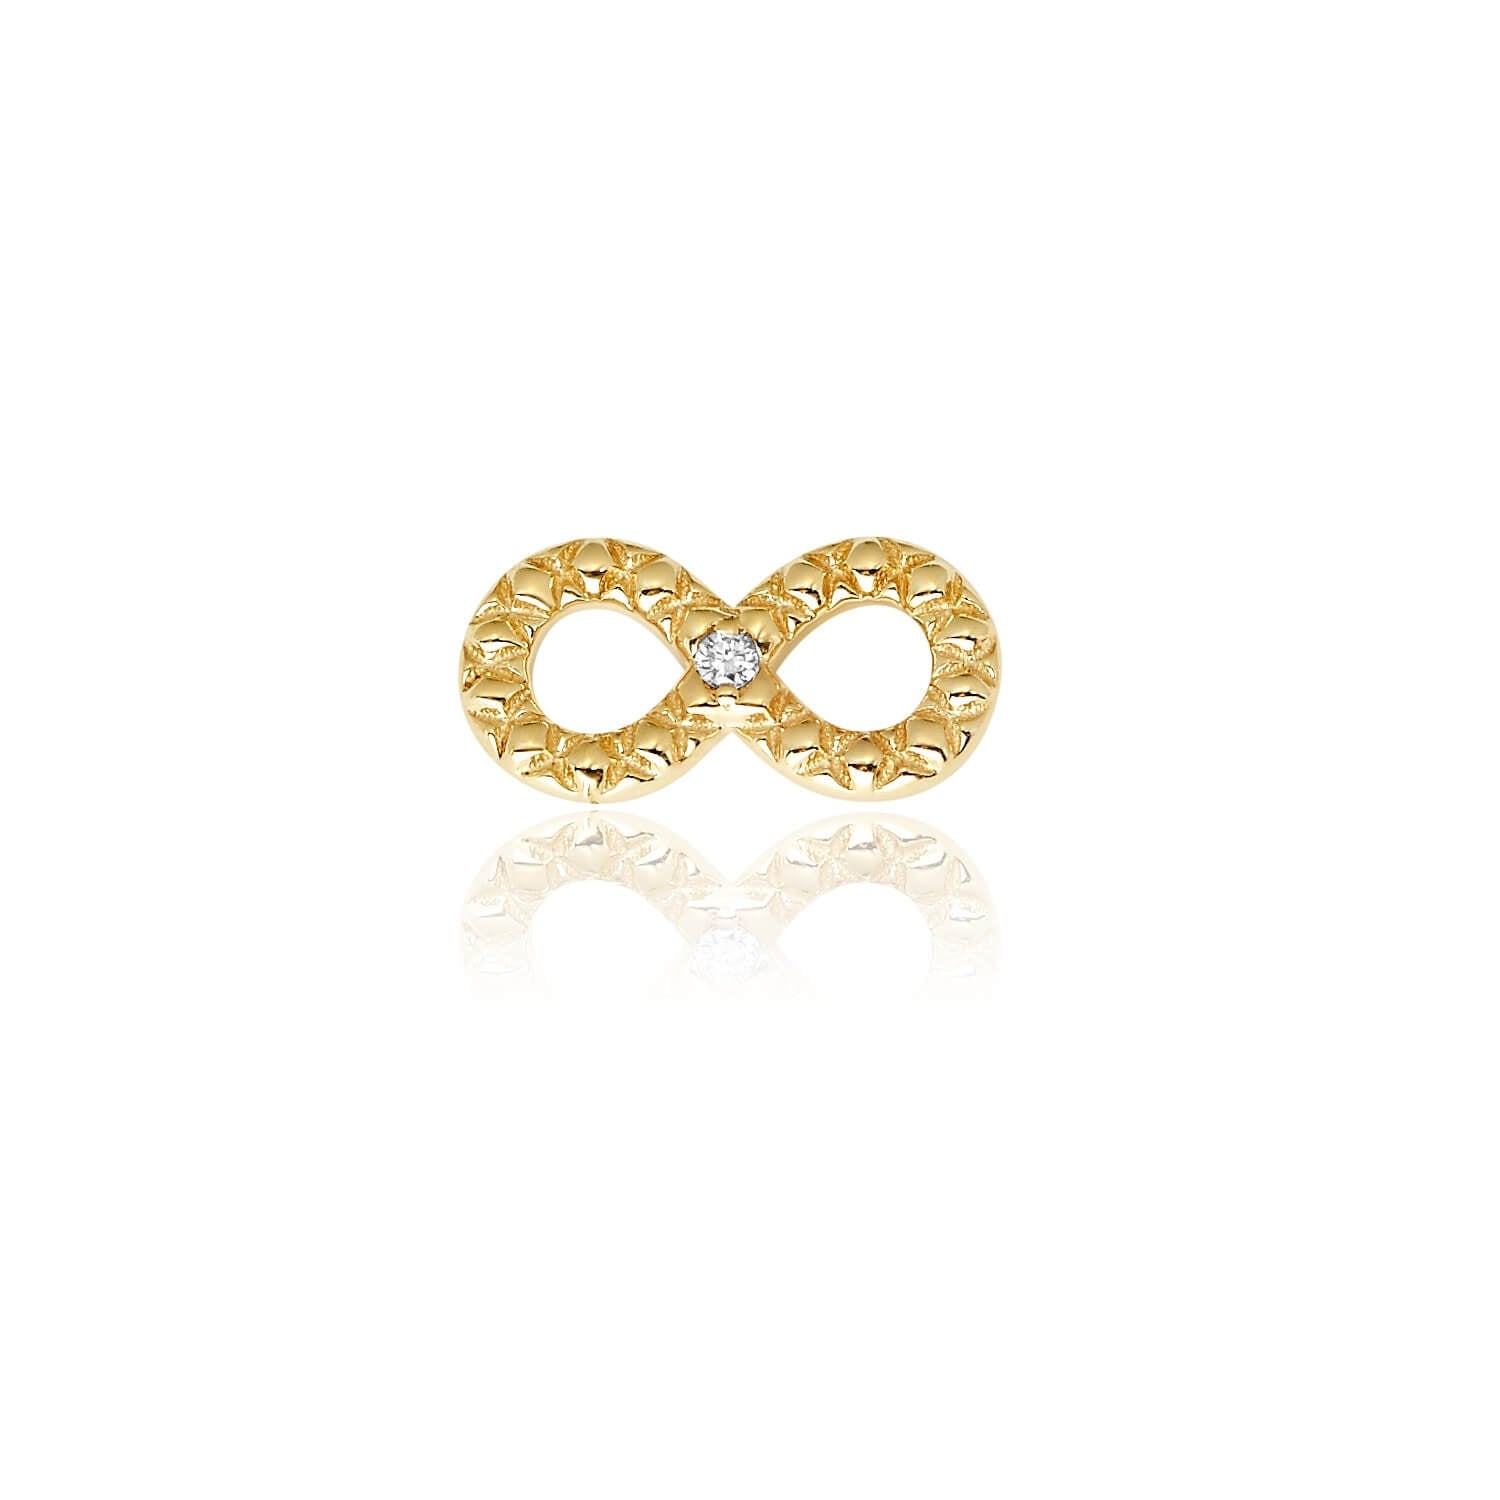 14k yellow gold infinity earring